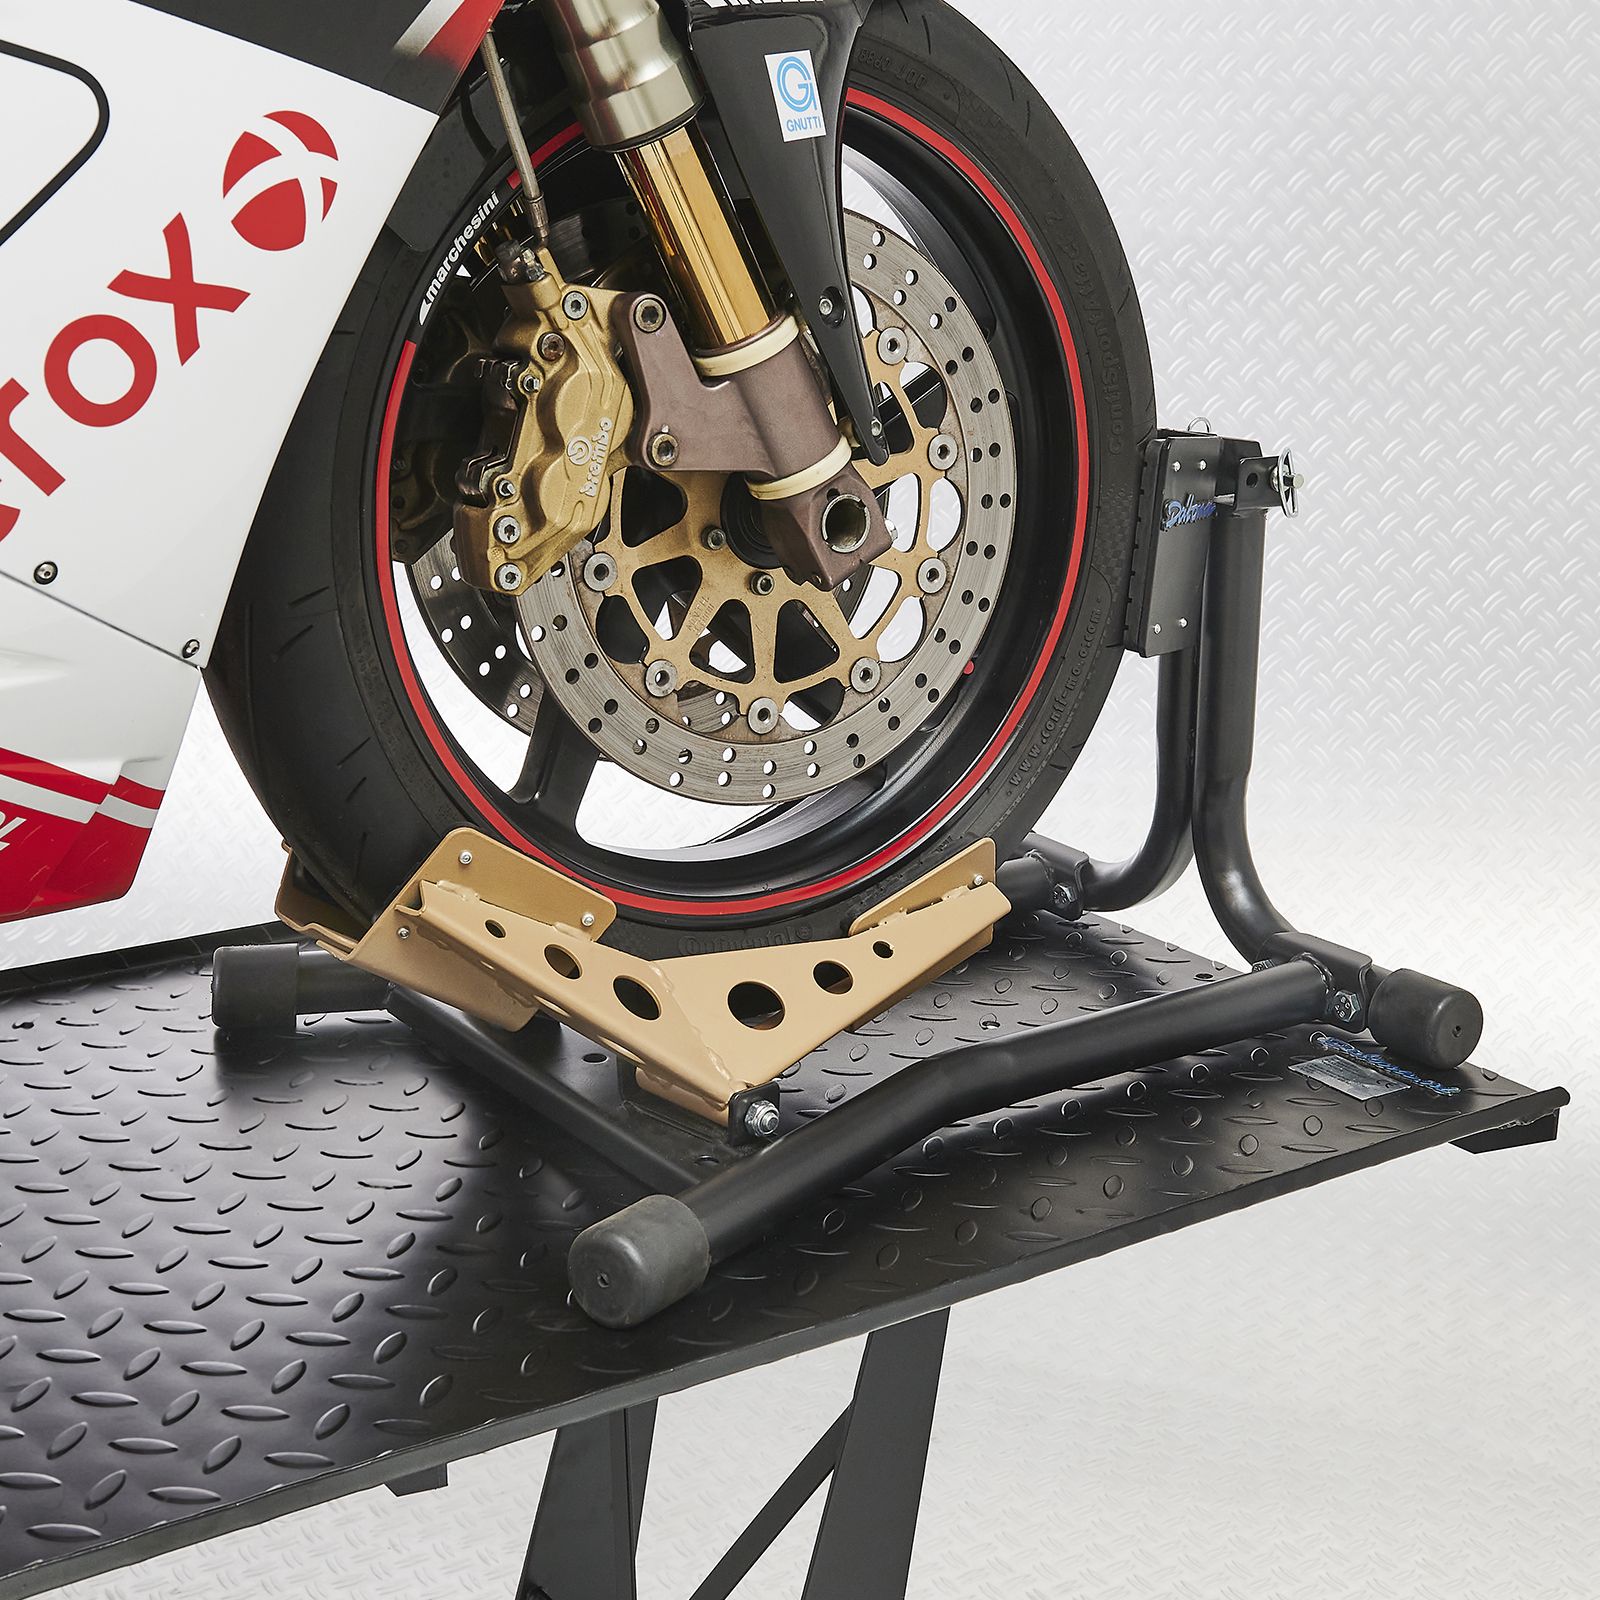 Voorwiel Ducati in rijklem met rubber